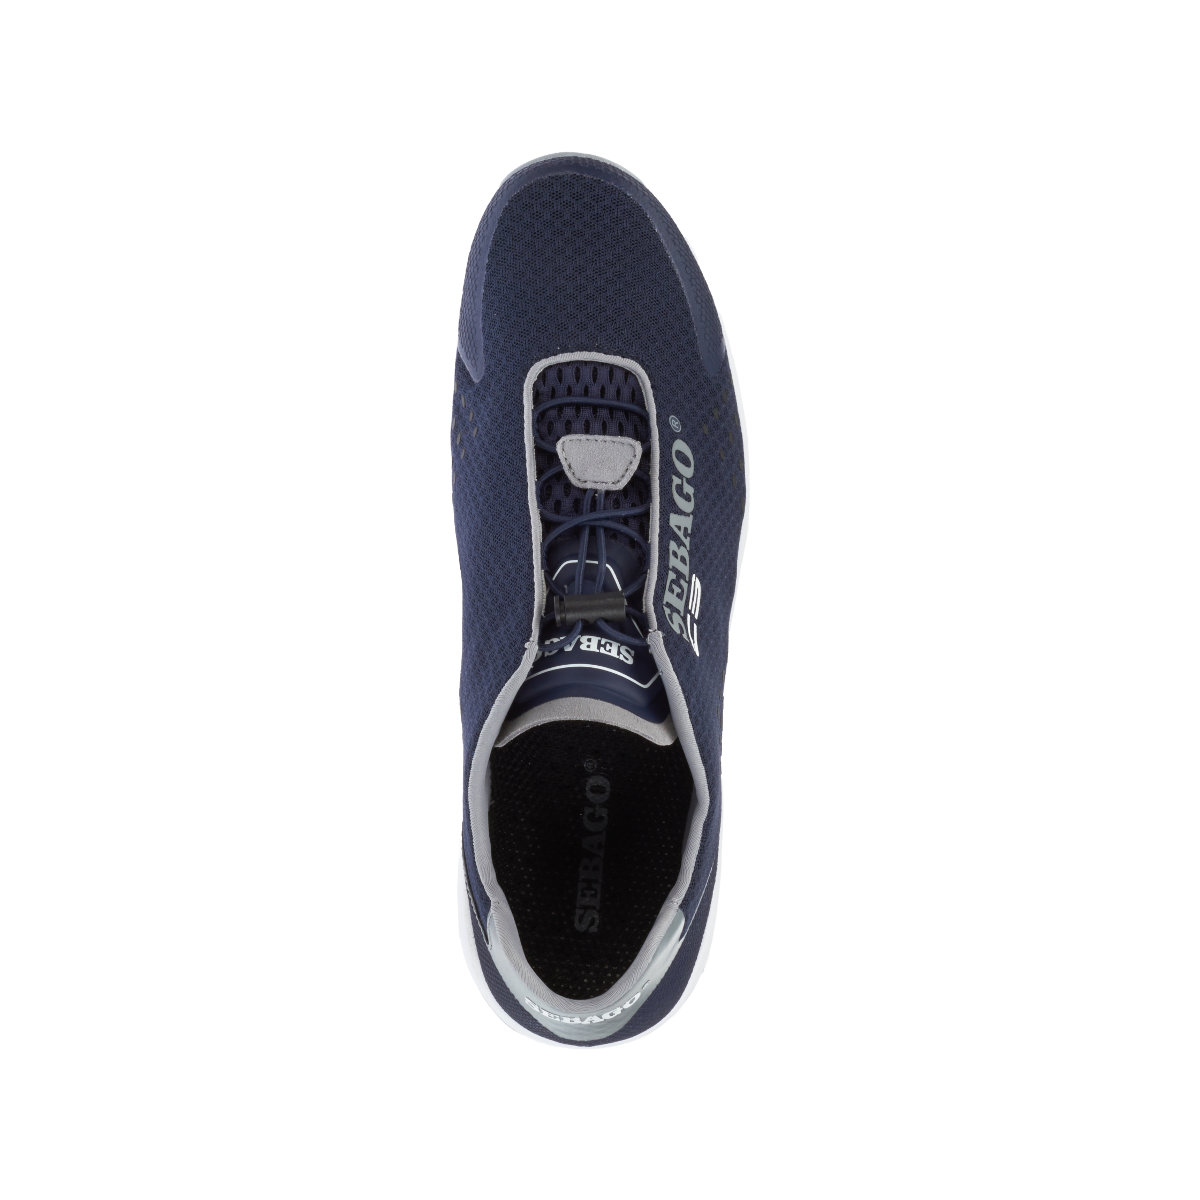 Sebago Cyphon Sea Sport chaussures à voile homme navy, taille EU 43,5 (US 9,5)